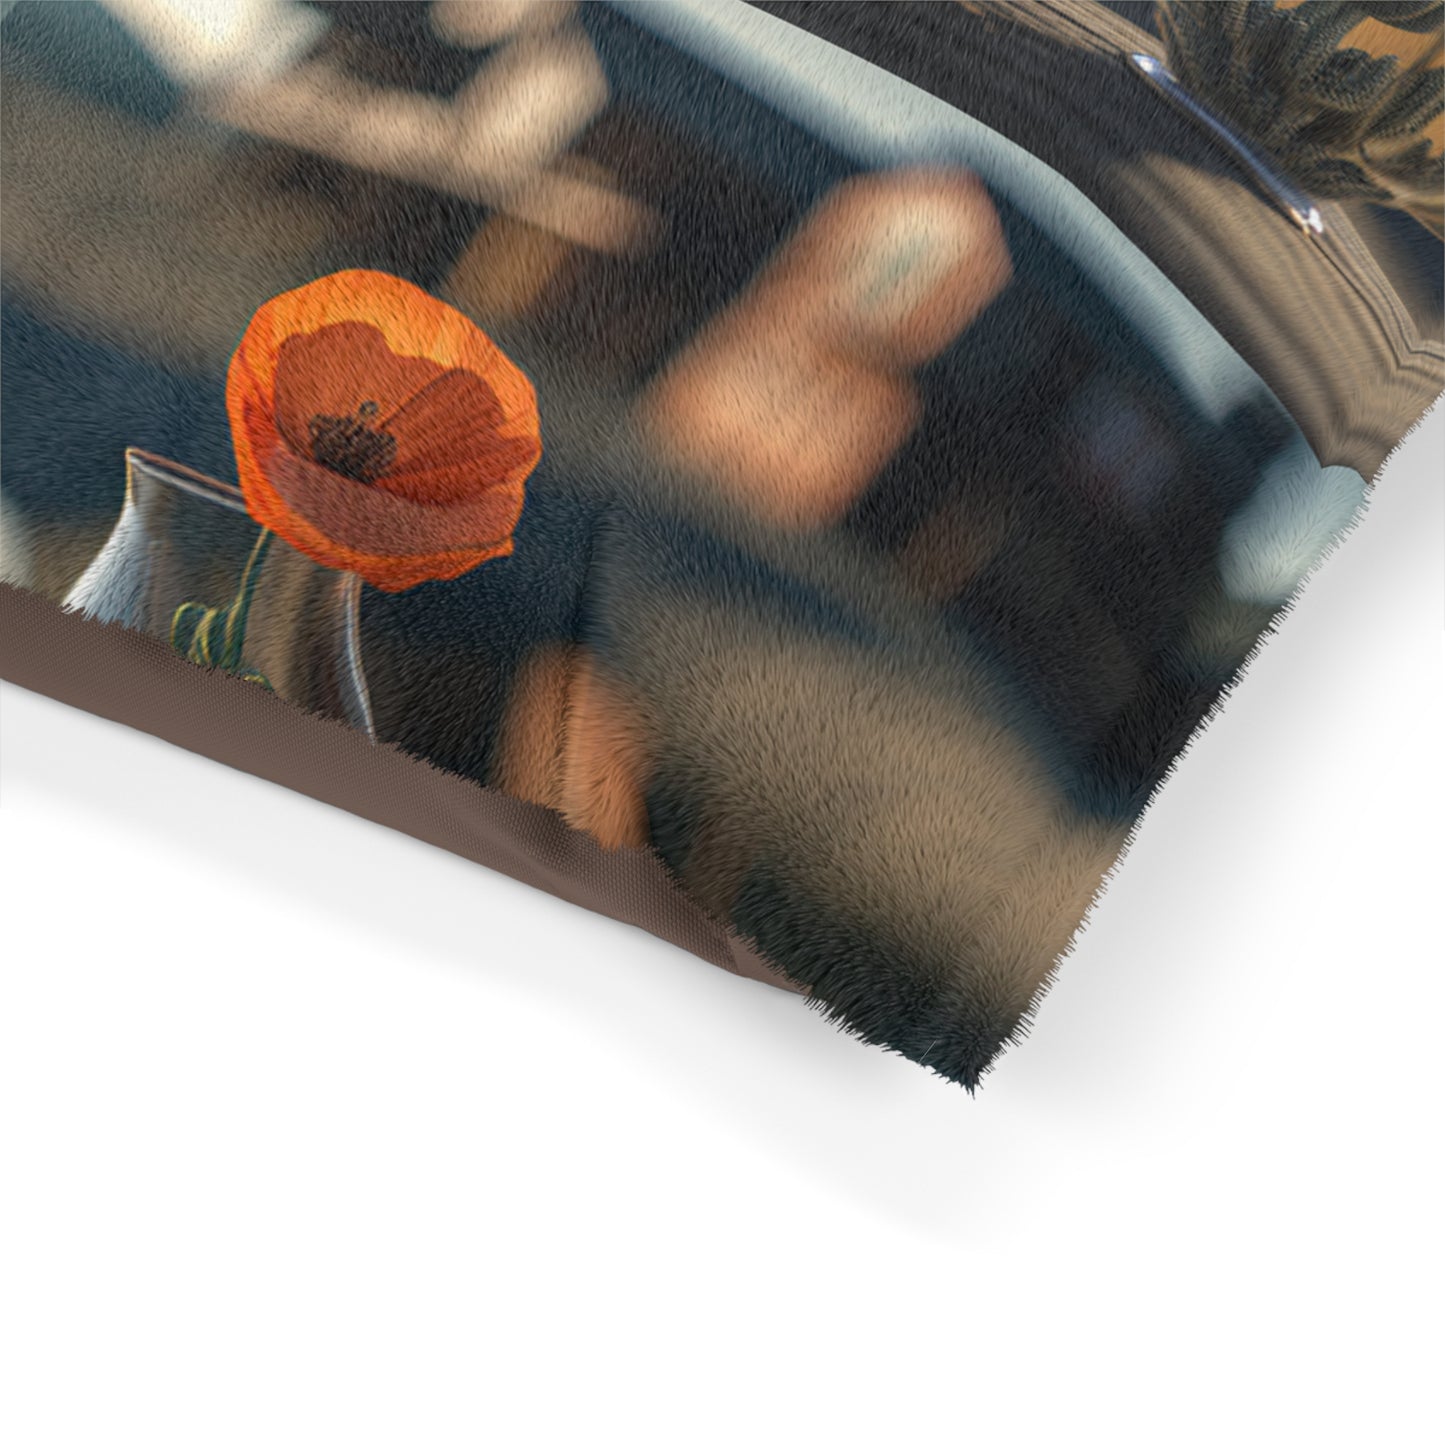 Pet Bed Orange Poppy in a Vase 5